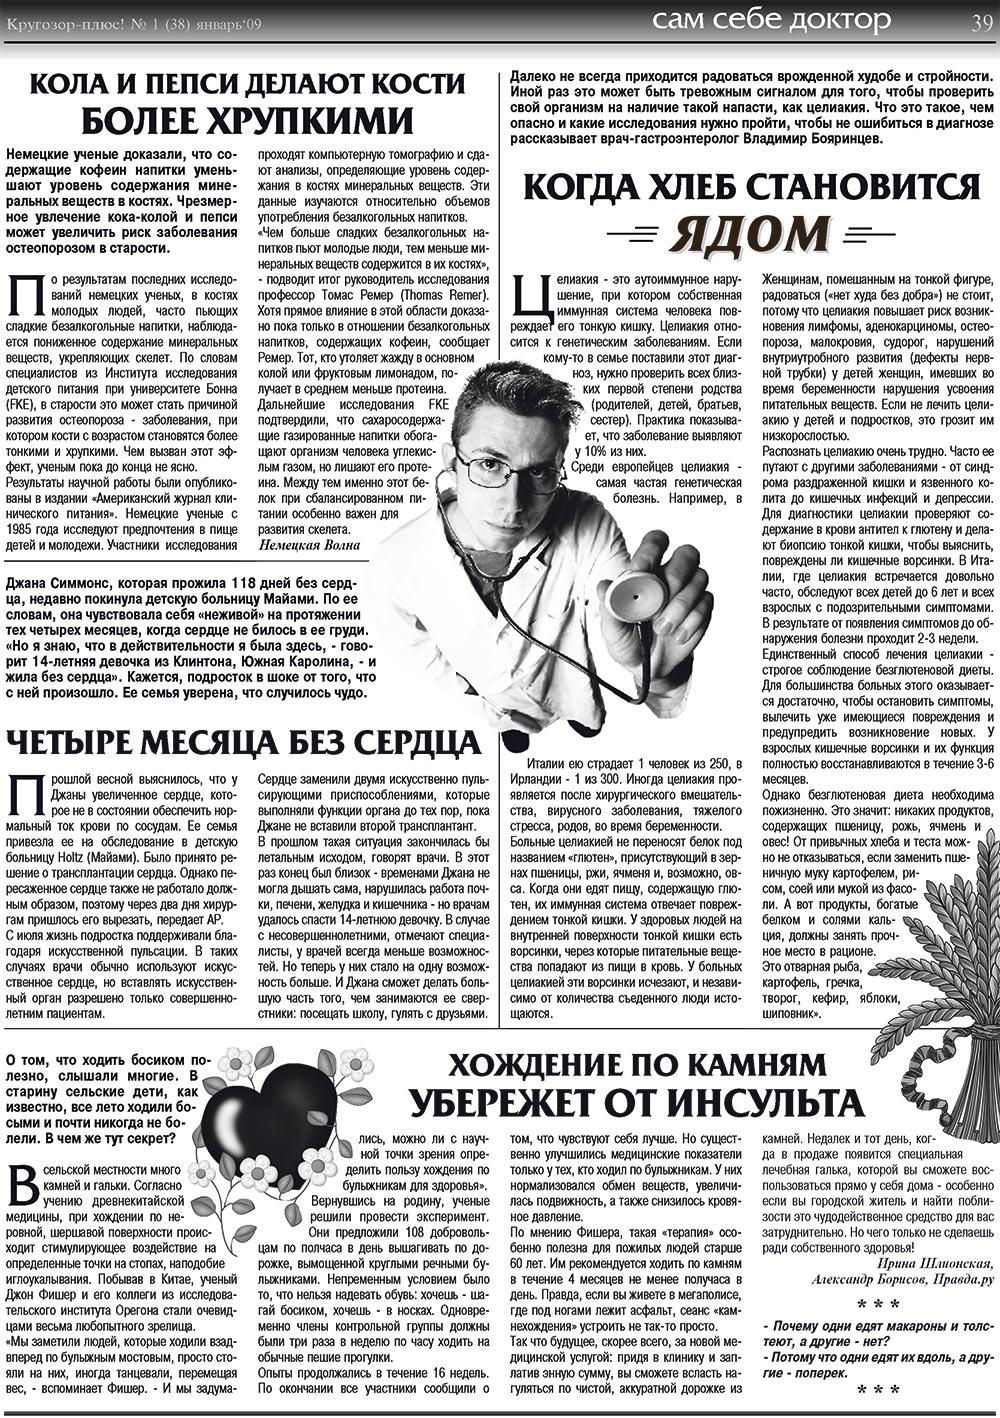 Кругозор плюс! (газета). 2009 год, номер 1, стр. 39